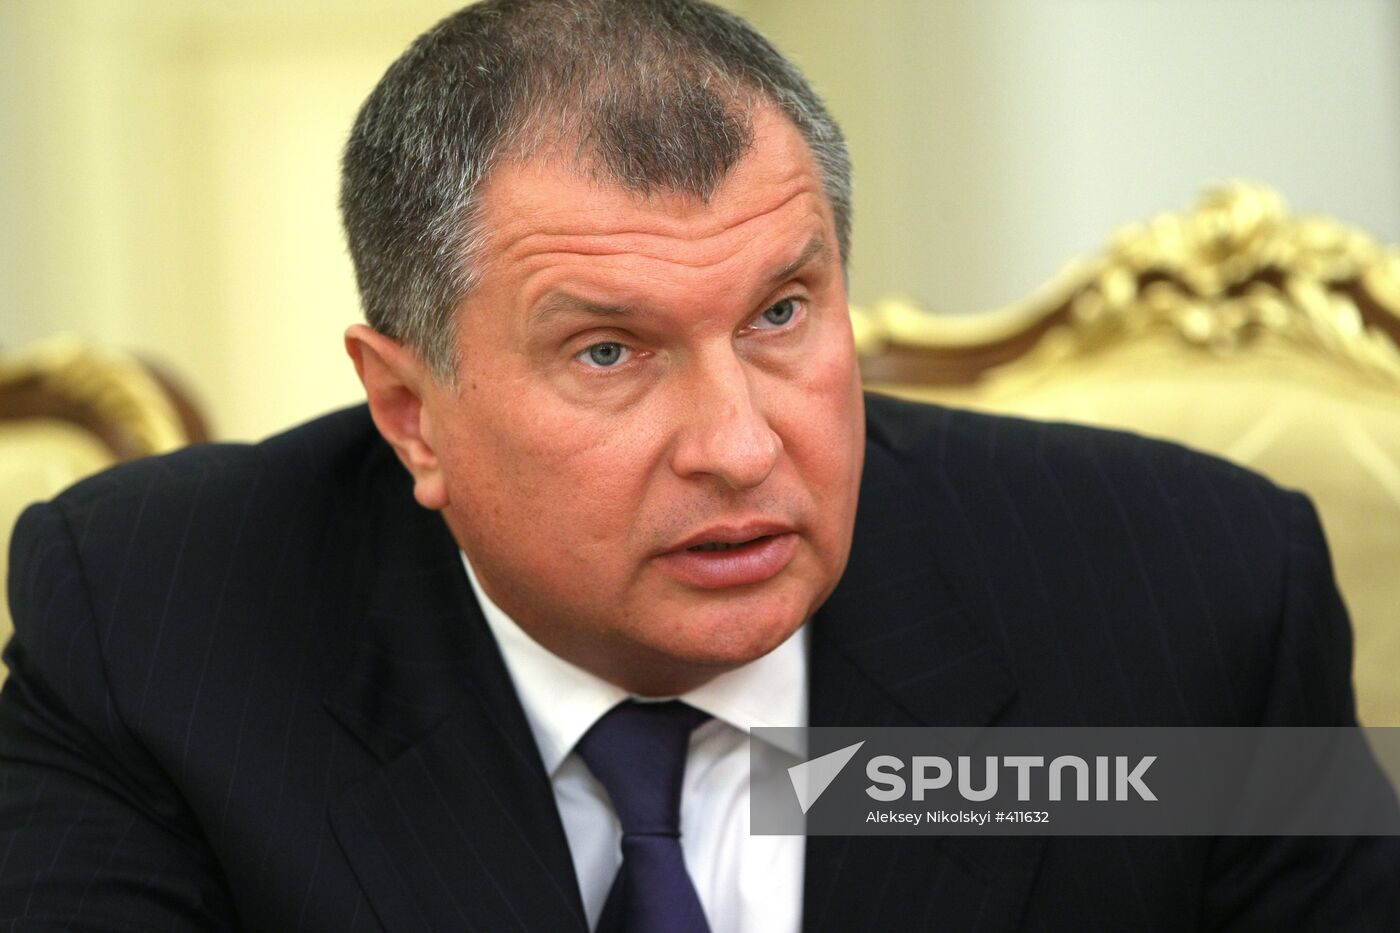 Igor Sechin attends government presidium session